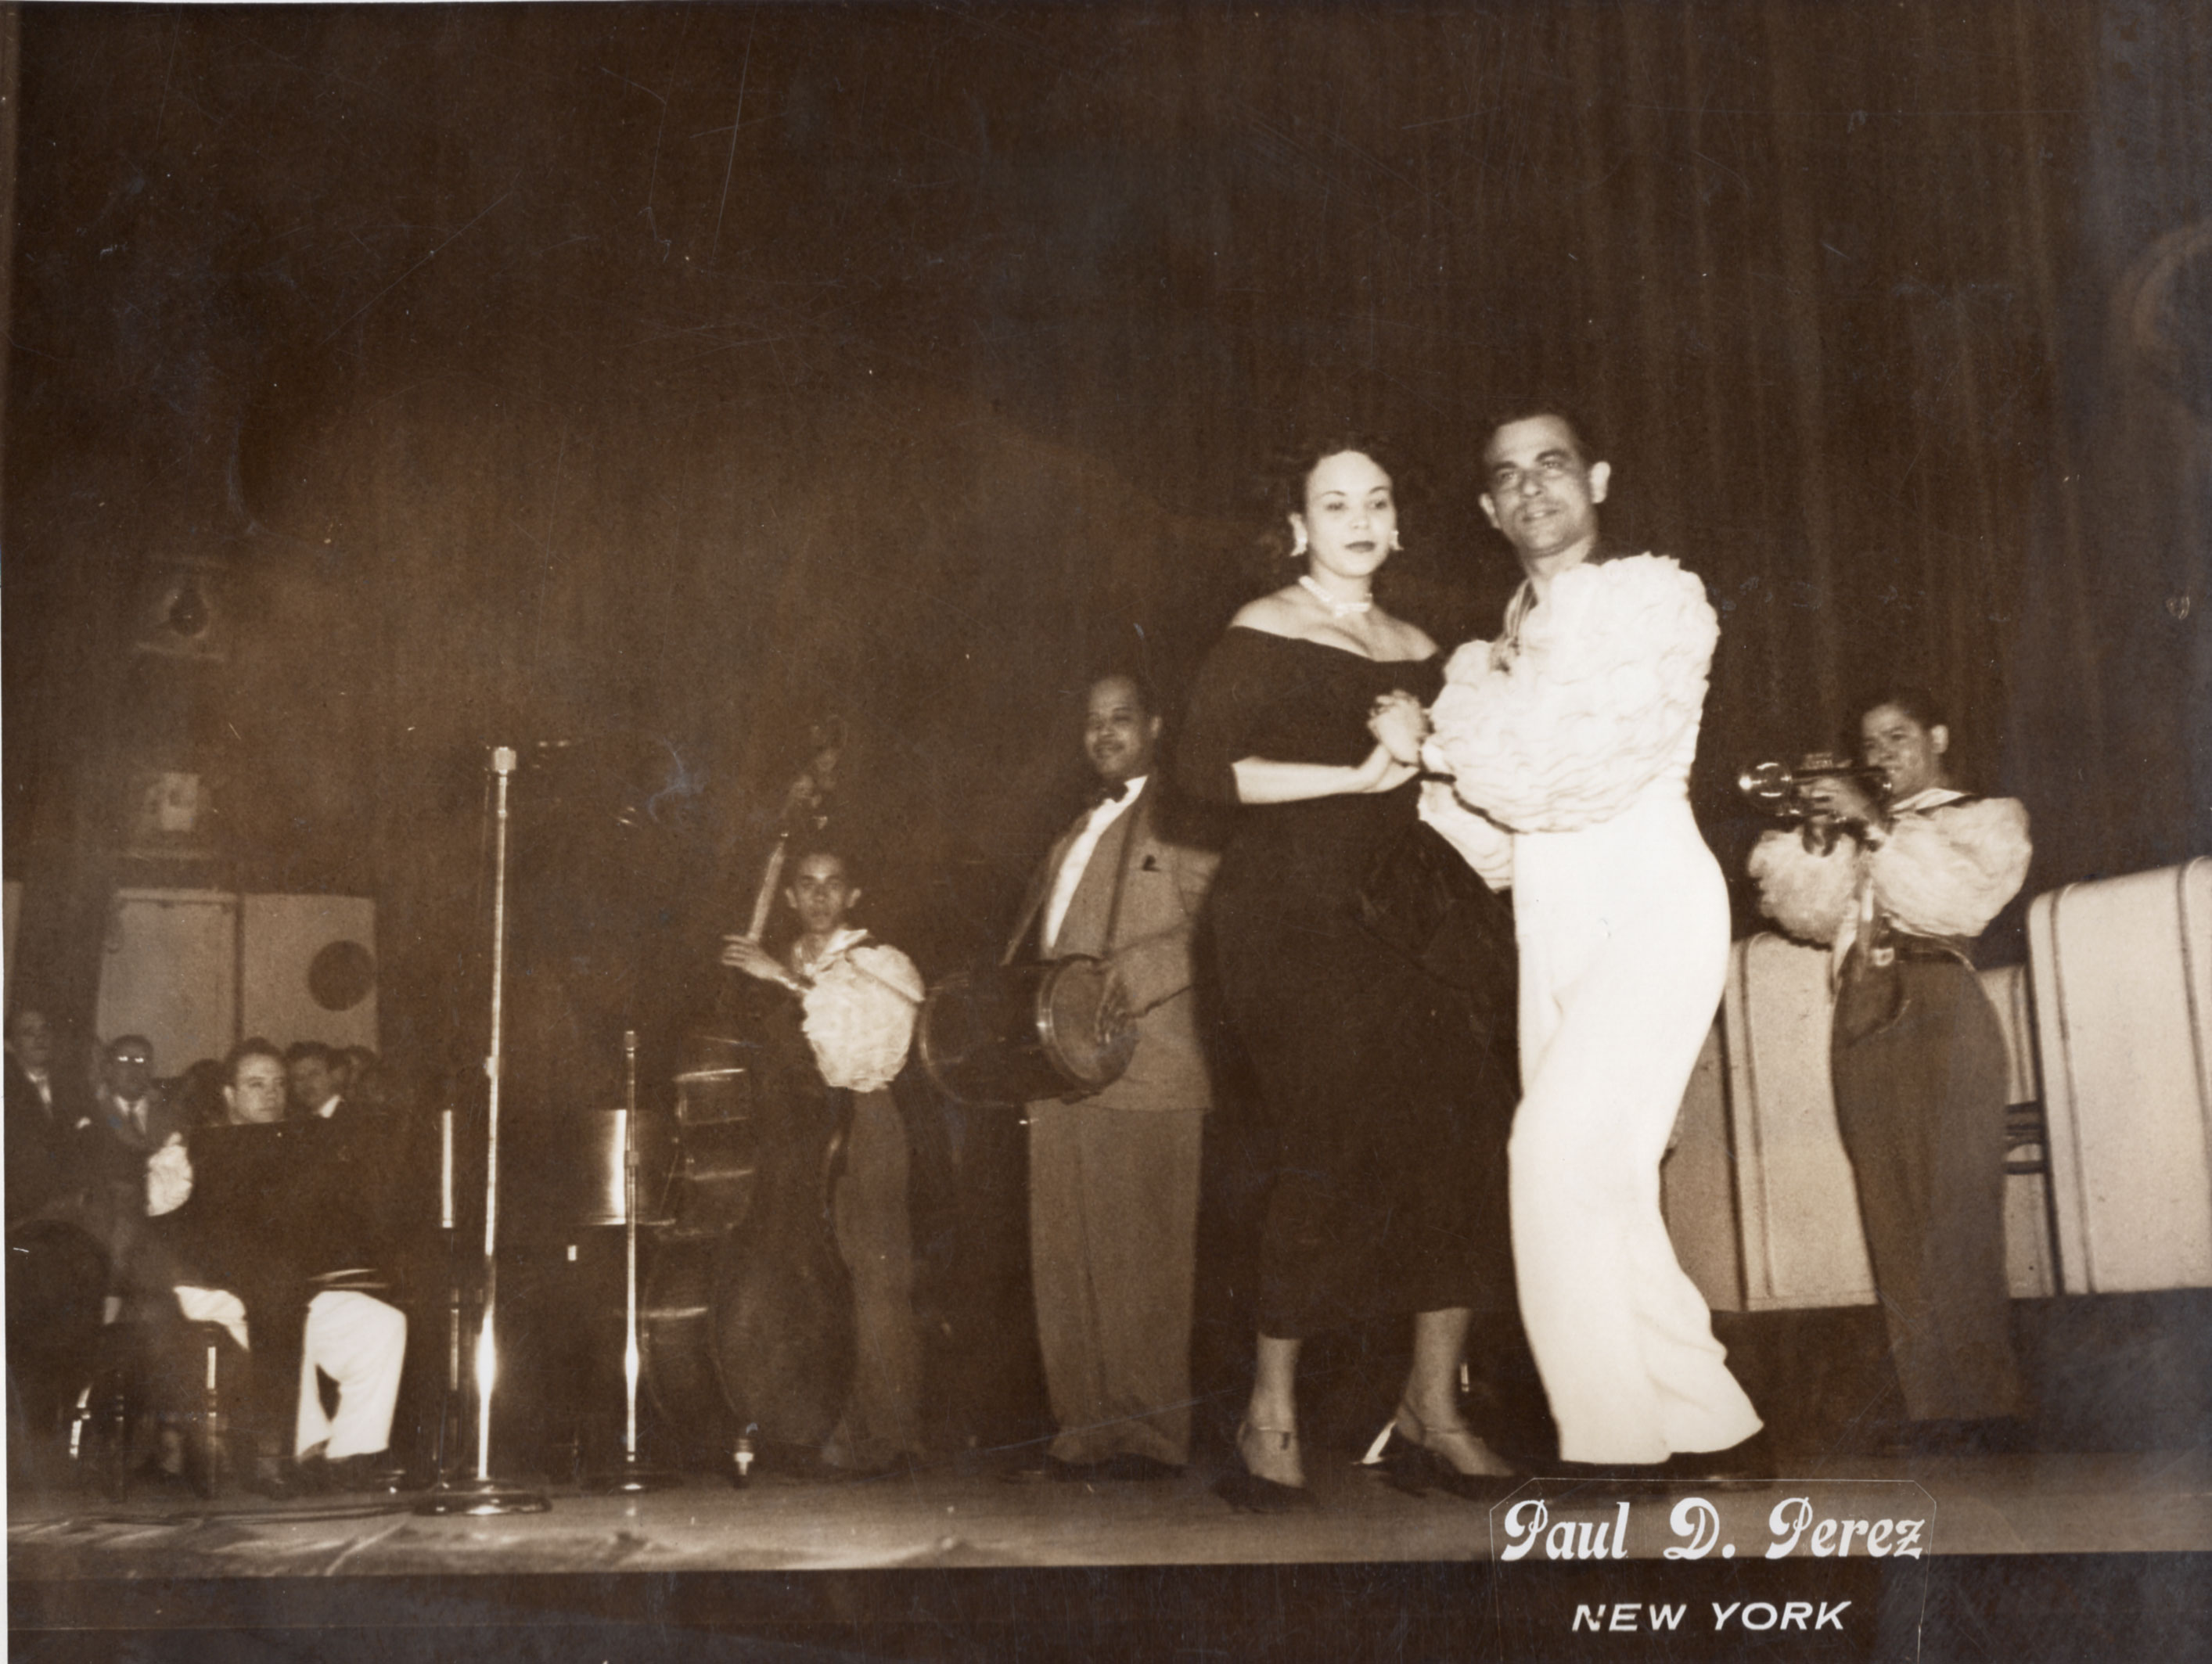 Damiron and his Band with Josecito Roman (tambora), ca. 1950s